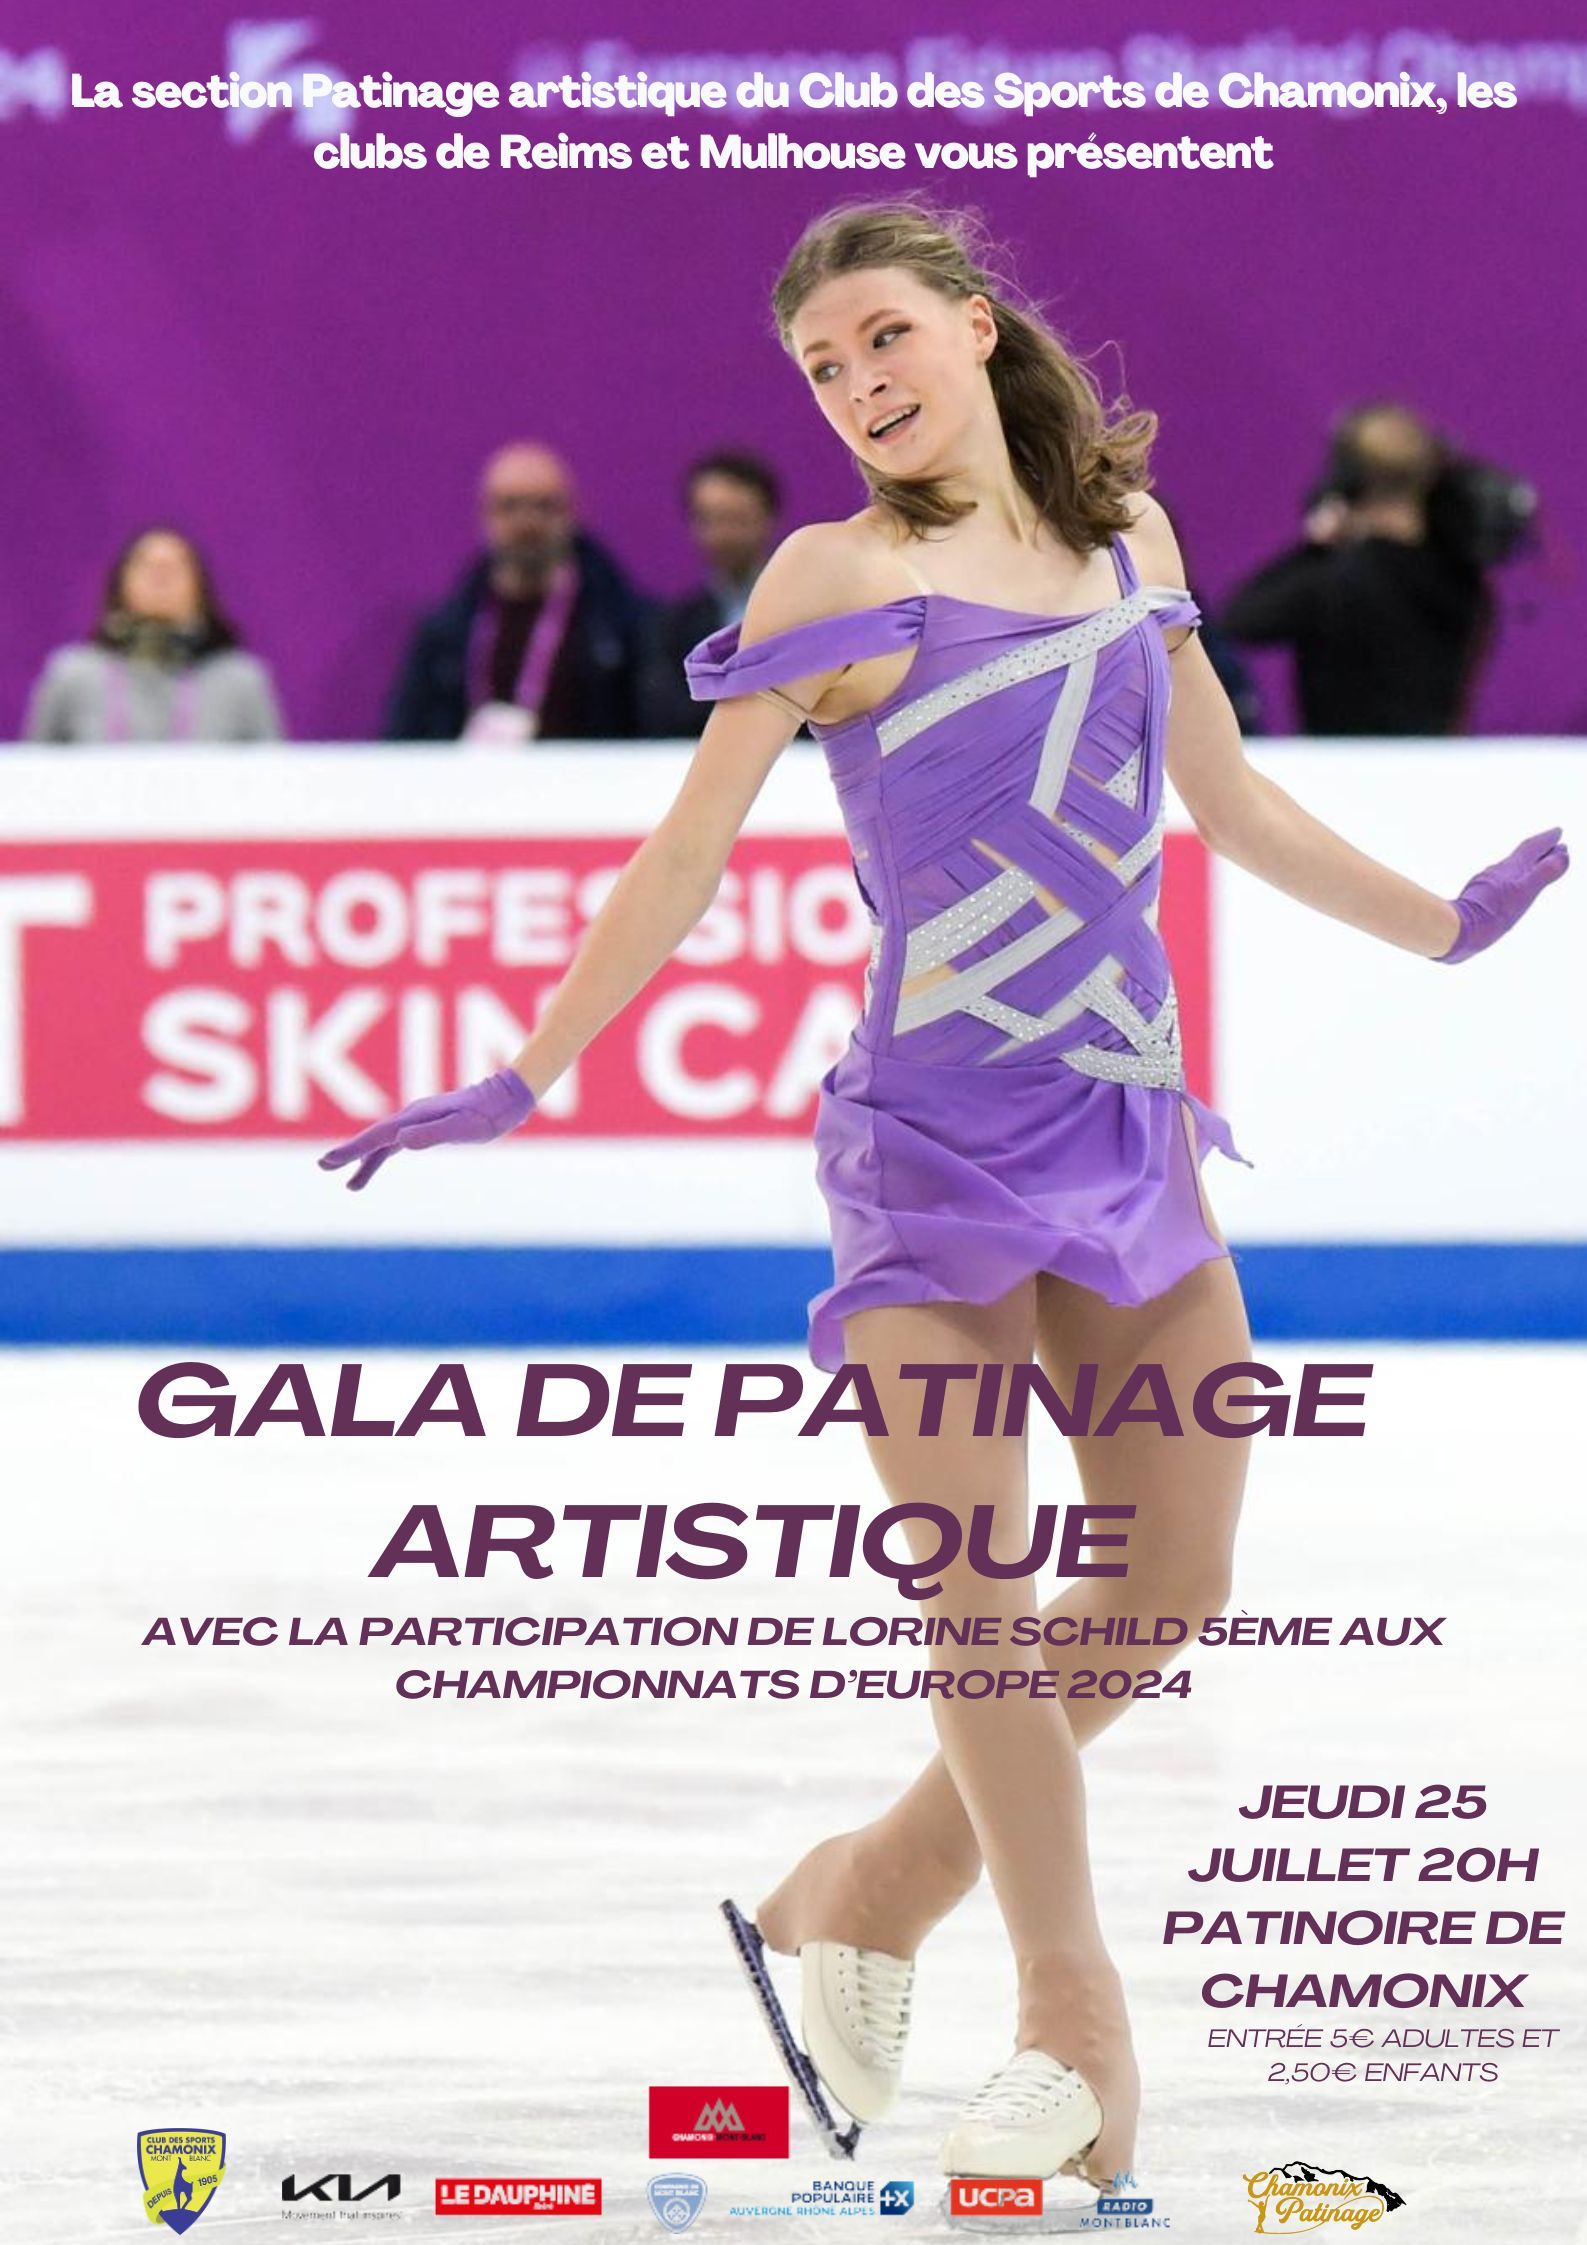 Gala de patinage artistique